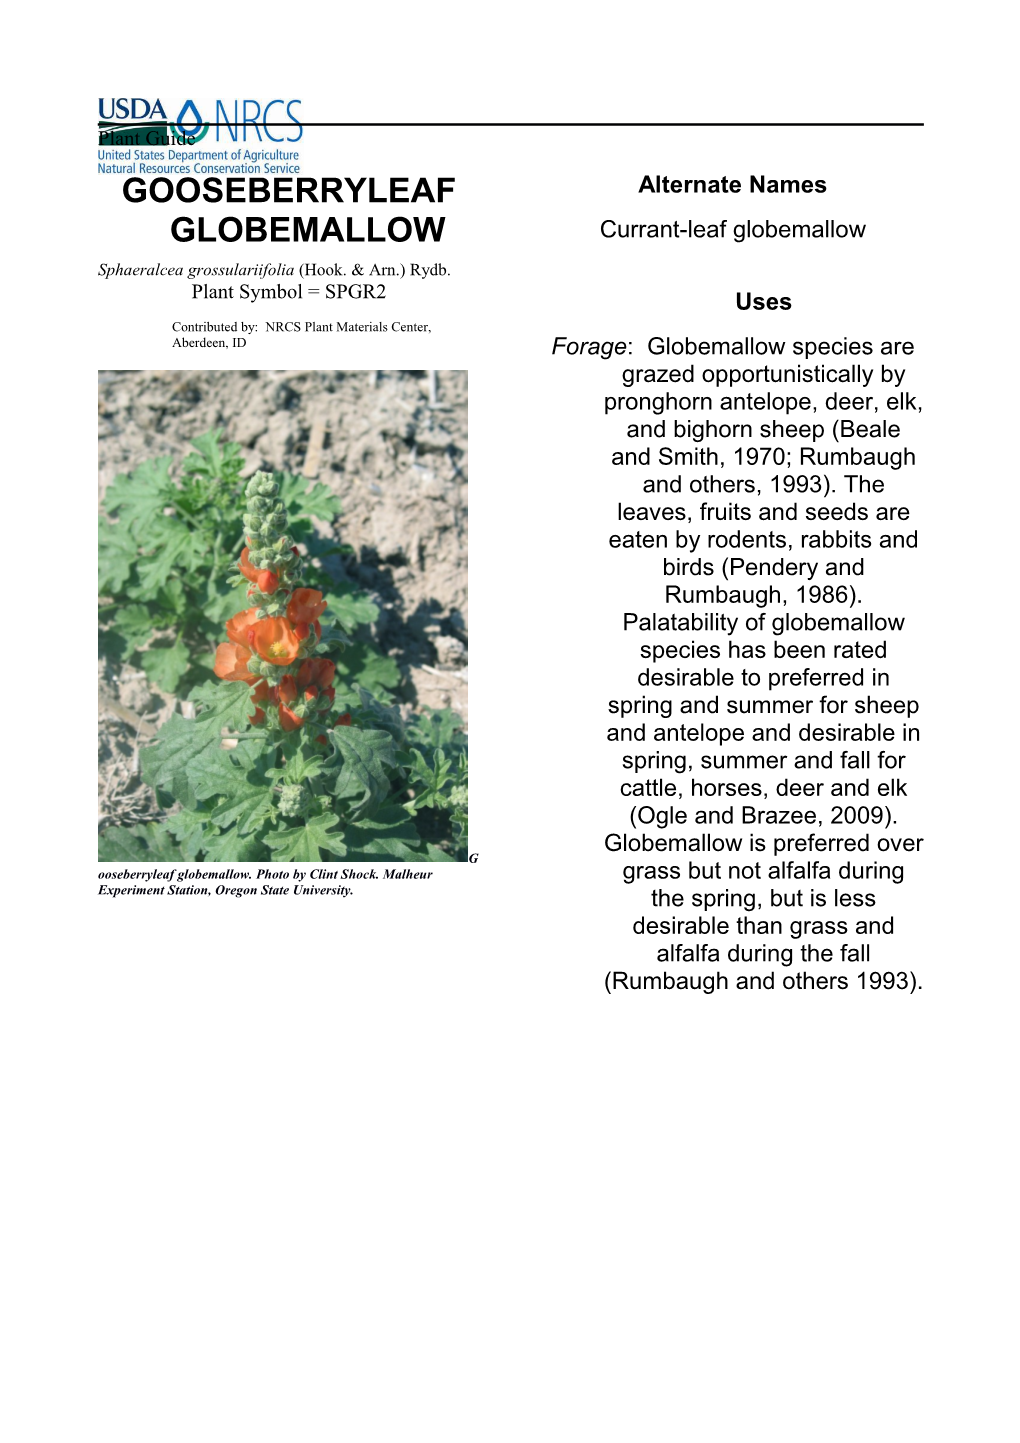 Plant Guide for Gooseberryleaf Globemallow (Sphaeralcea Grossulariifolia)